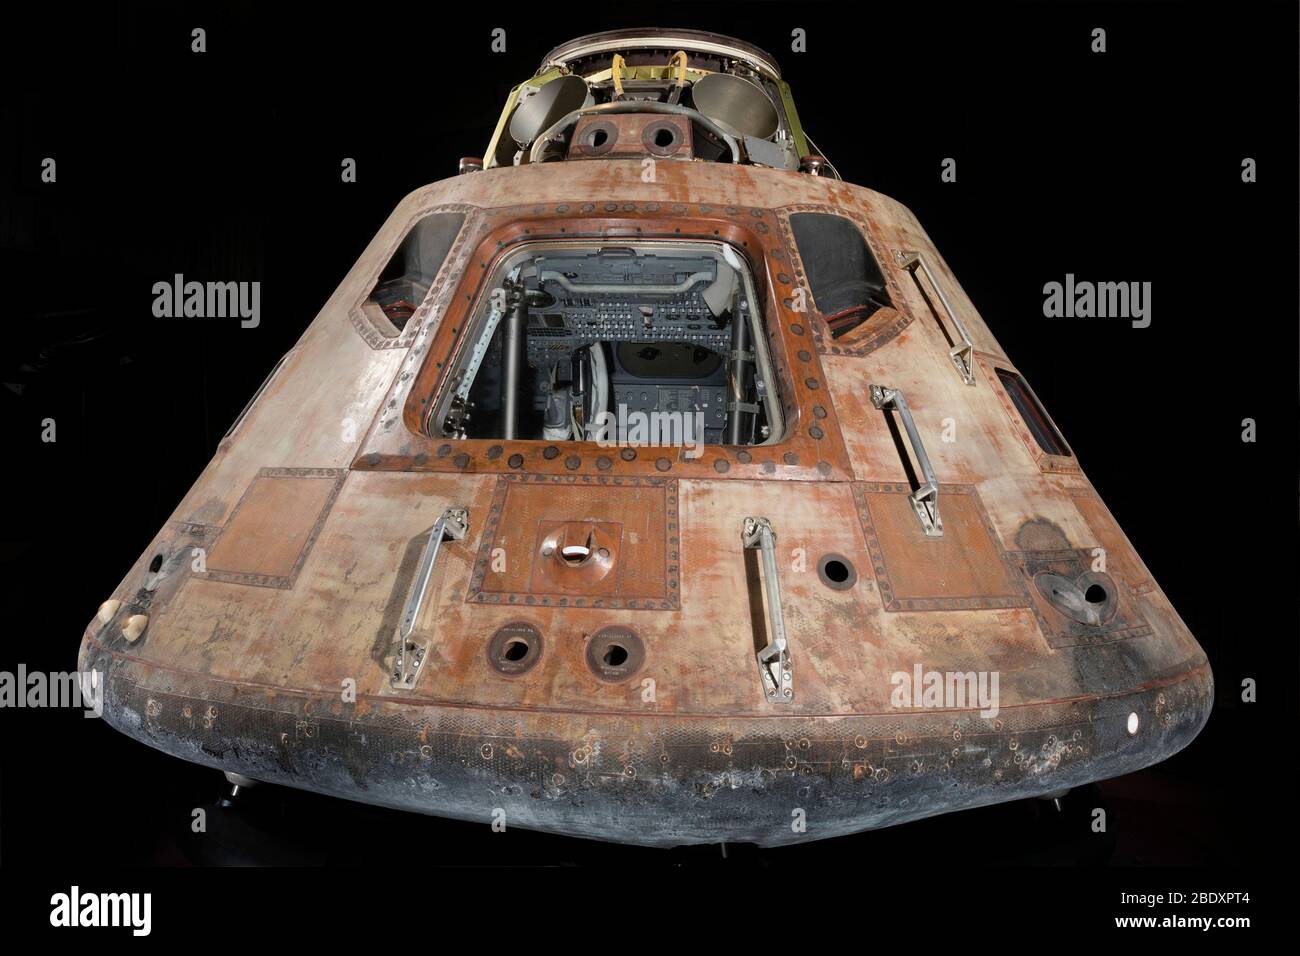 Módulo de comandos Apollo 11 Foto de stock